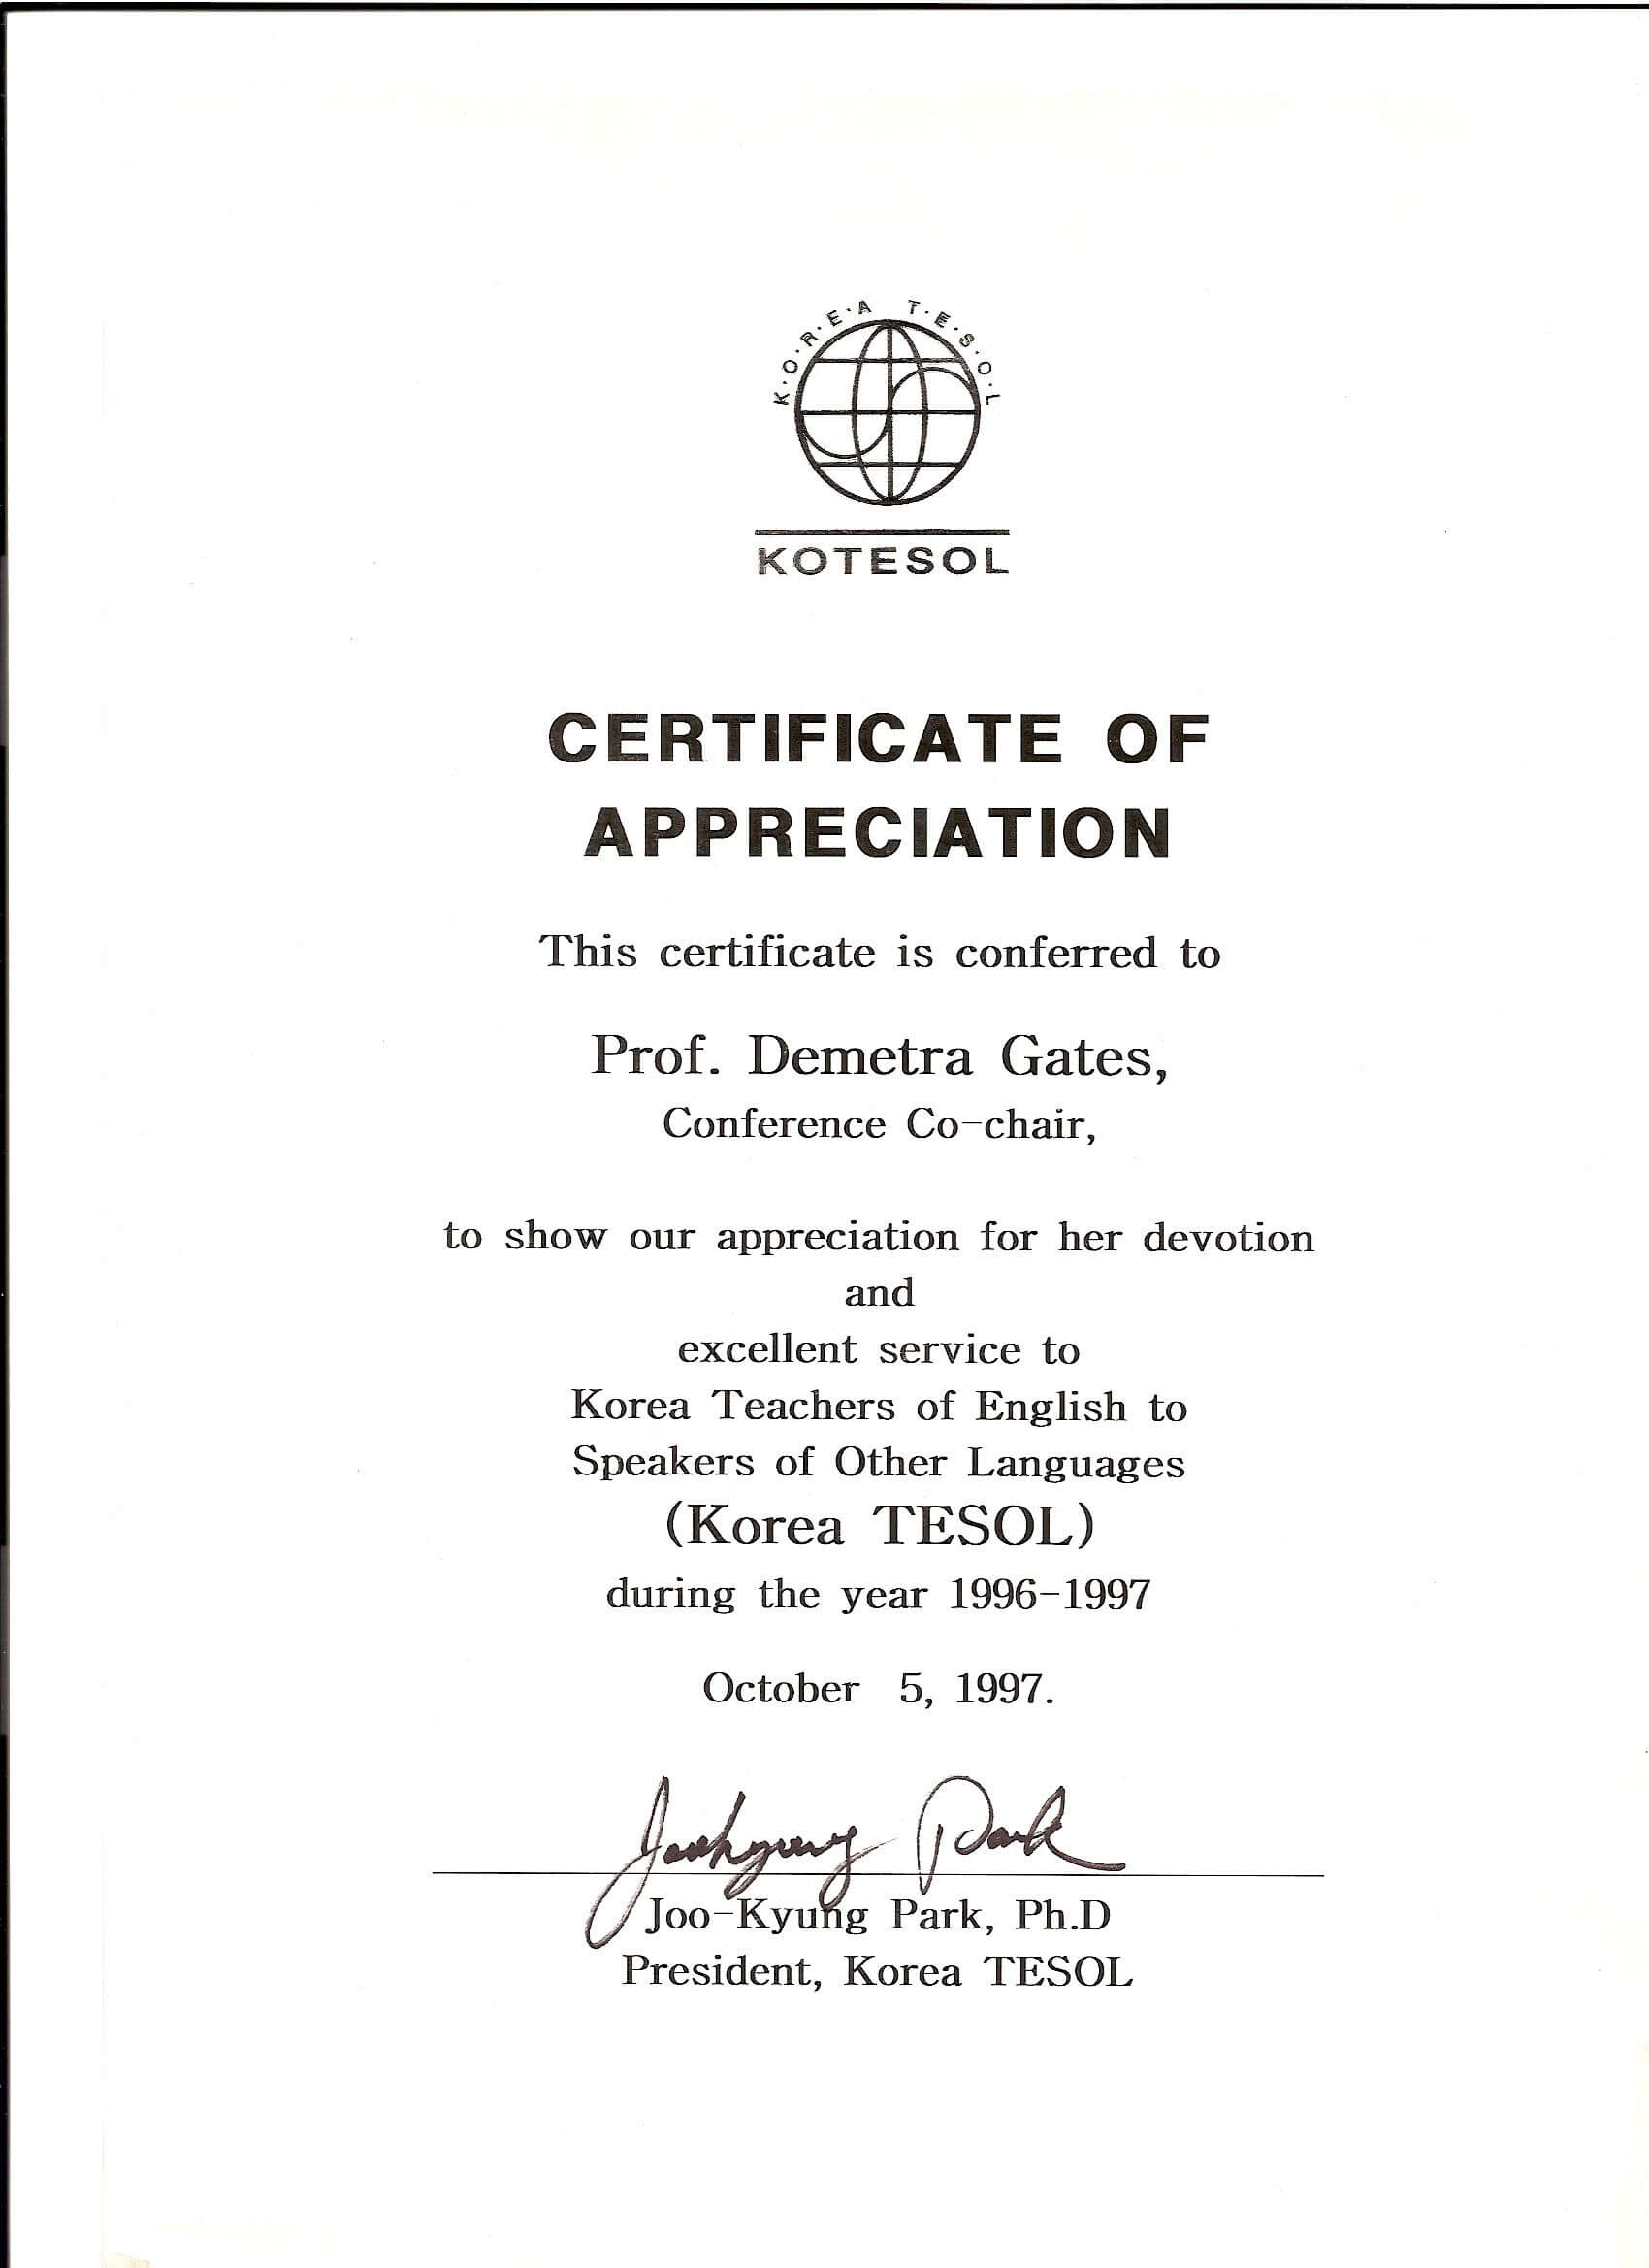 Kotesol Presidential Certificate Of Appreciation (1997 Pertaining To University Graduation Certificate Template